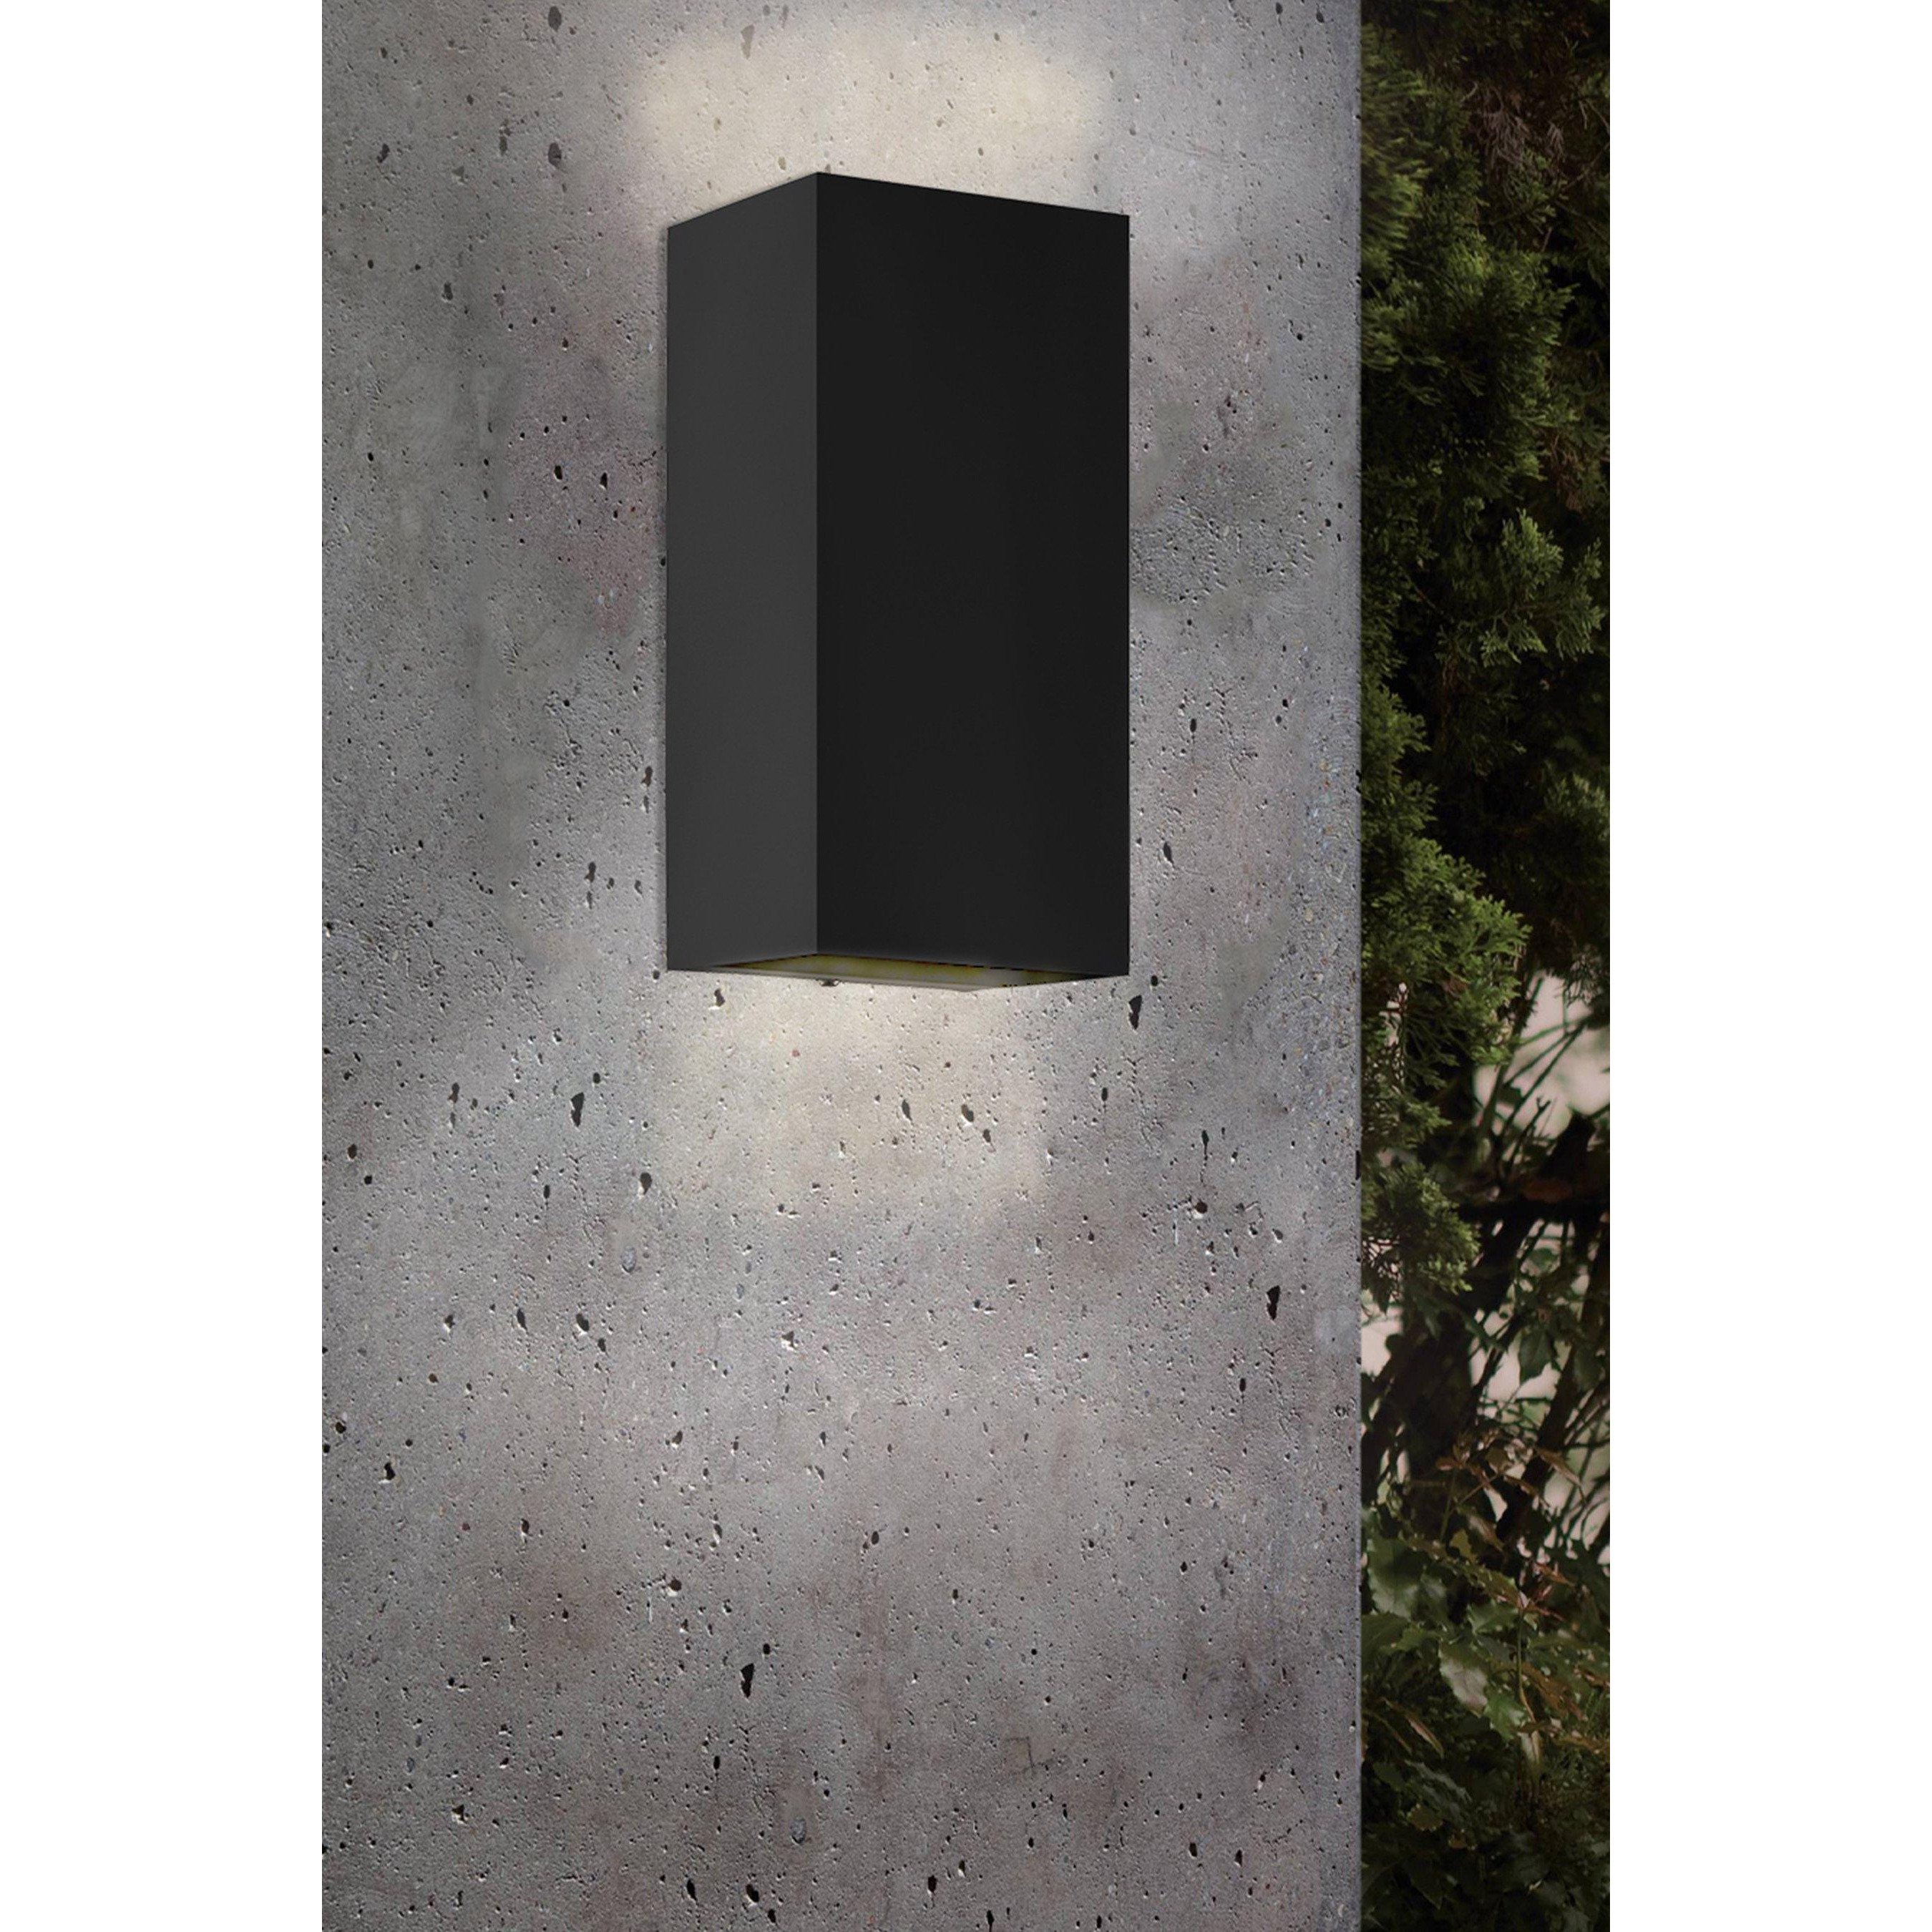 Eremitana-Z Zinc/Classic Black Steel Single Pendant Light - image 1